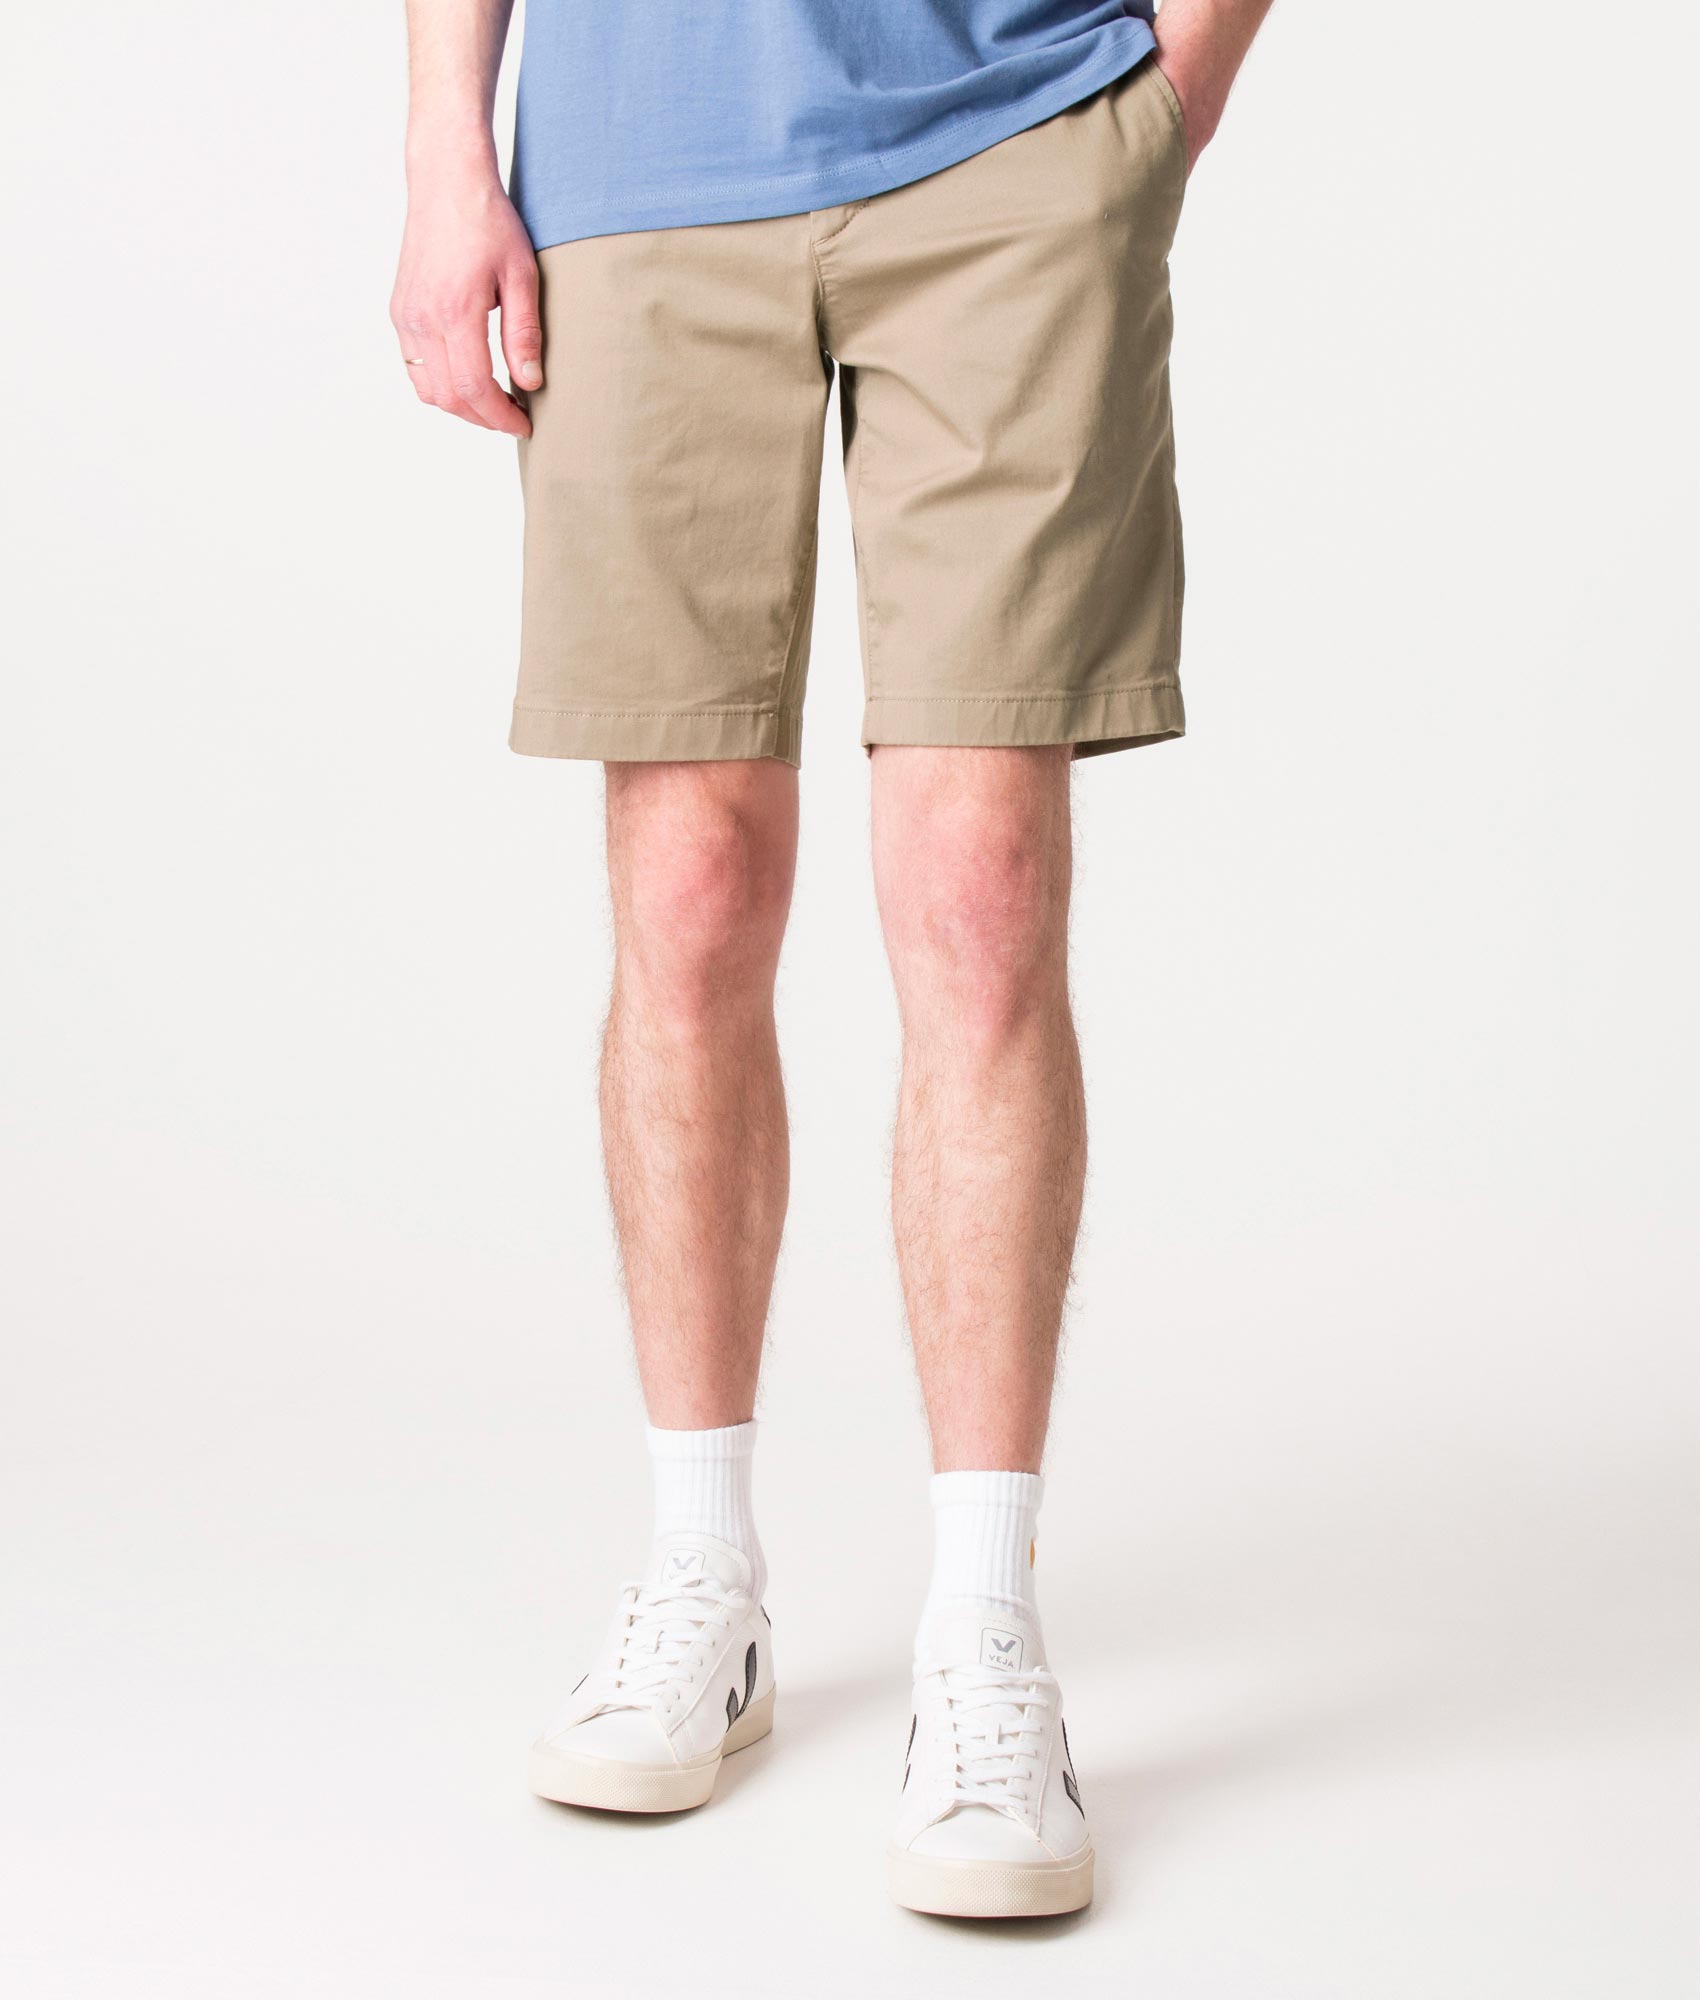 Lacoste Mens Slim Fit Bermuda Chino Shorts - Colour: CB8 Lion - Size: 32W